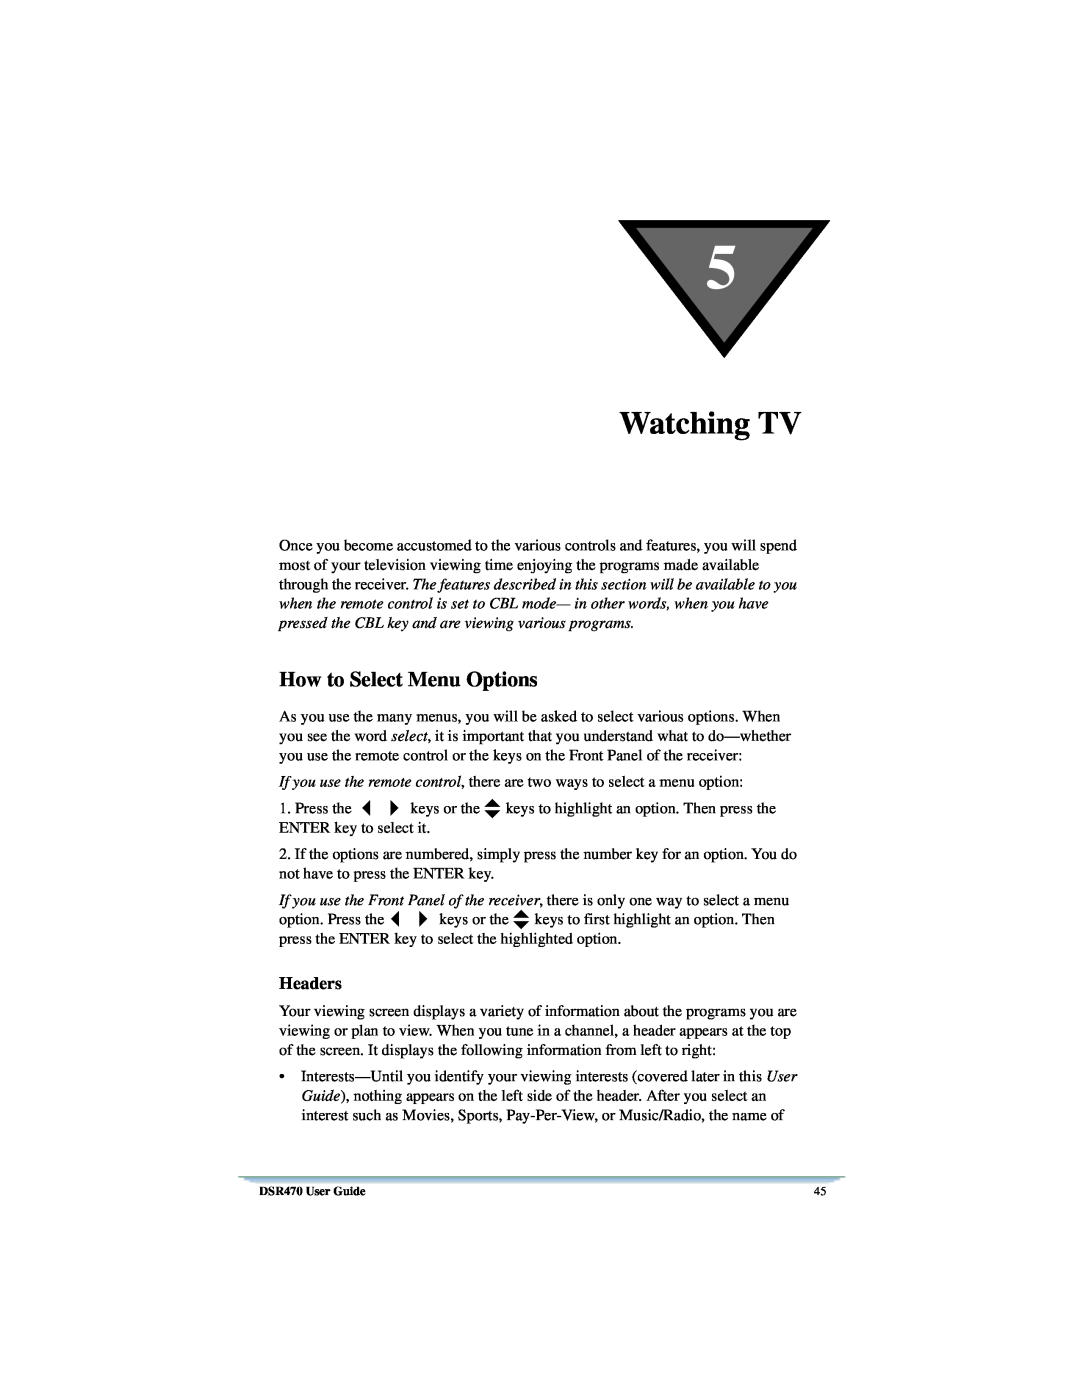 Univex DSR470 manual Watching TV, How to Select Menu Options, Headers 